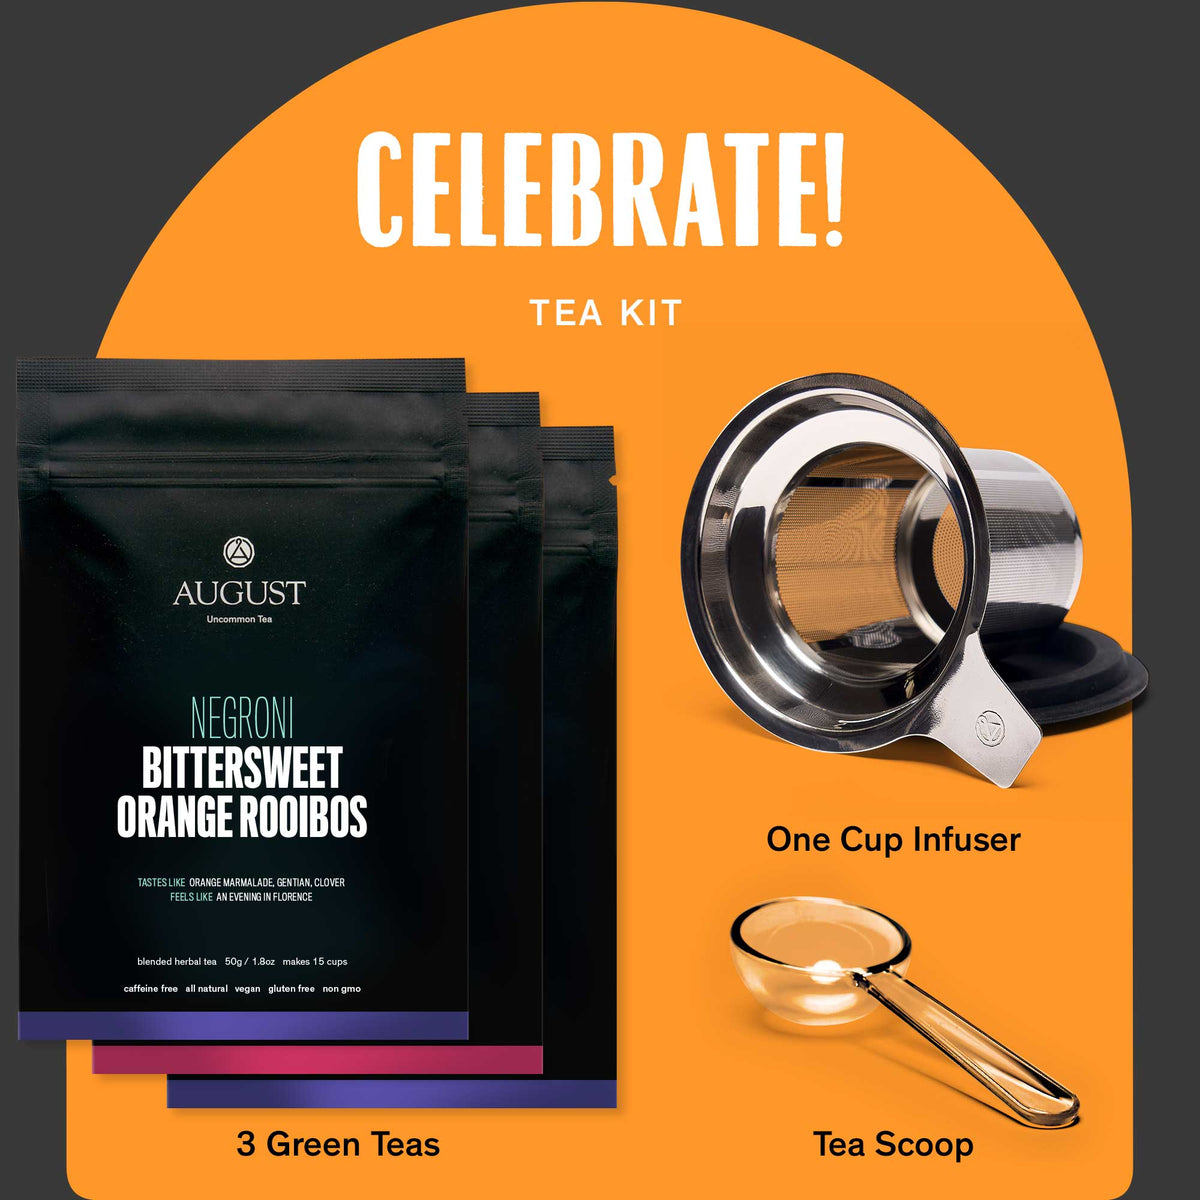 Celebrate! Tea Kit: 3 Teas With Cocktail Flavor and Zero Alcohol